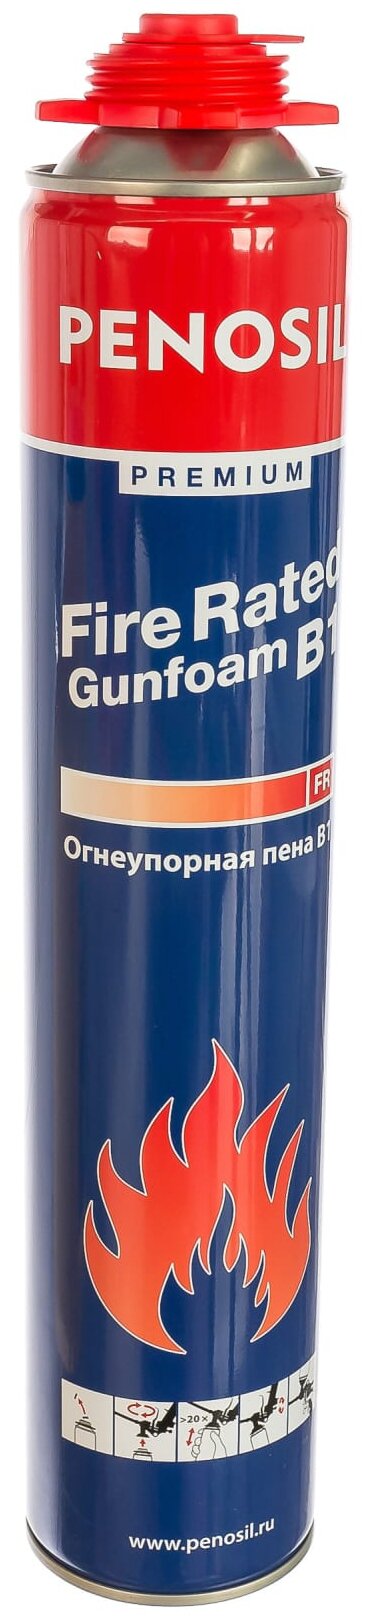 Penosil Premium Fire Rated Gunfoam B1 720 мл